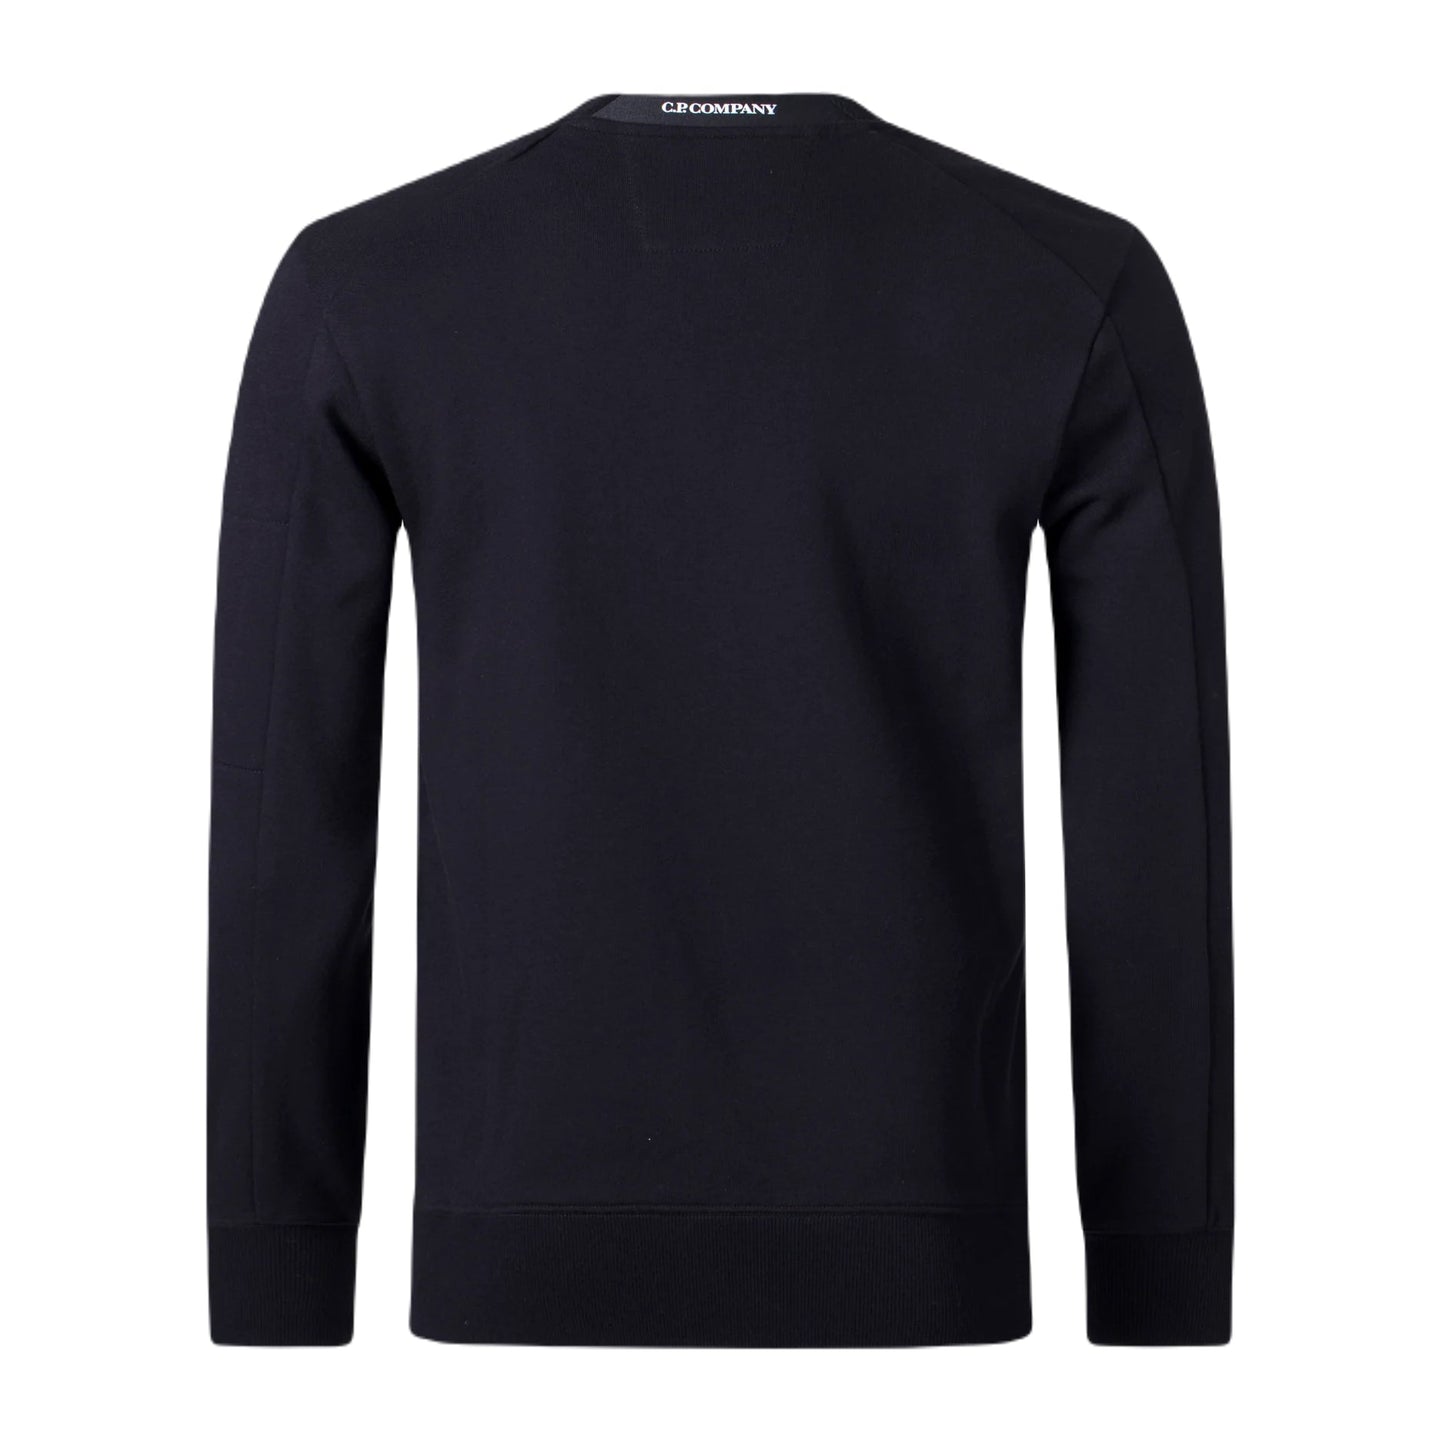 C.P. Company Raised Fleece Lens Sweatshirt - 999 Black - Escape Menswear